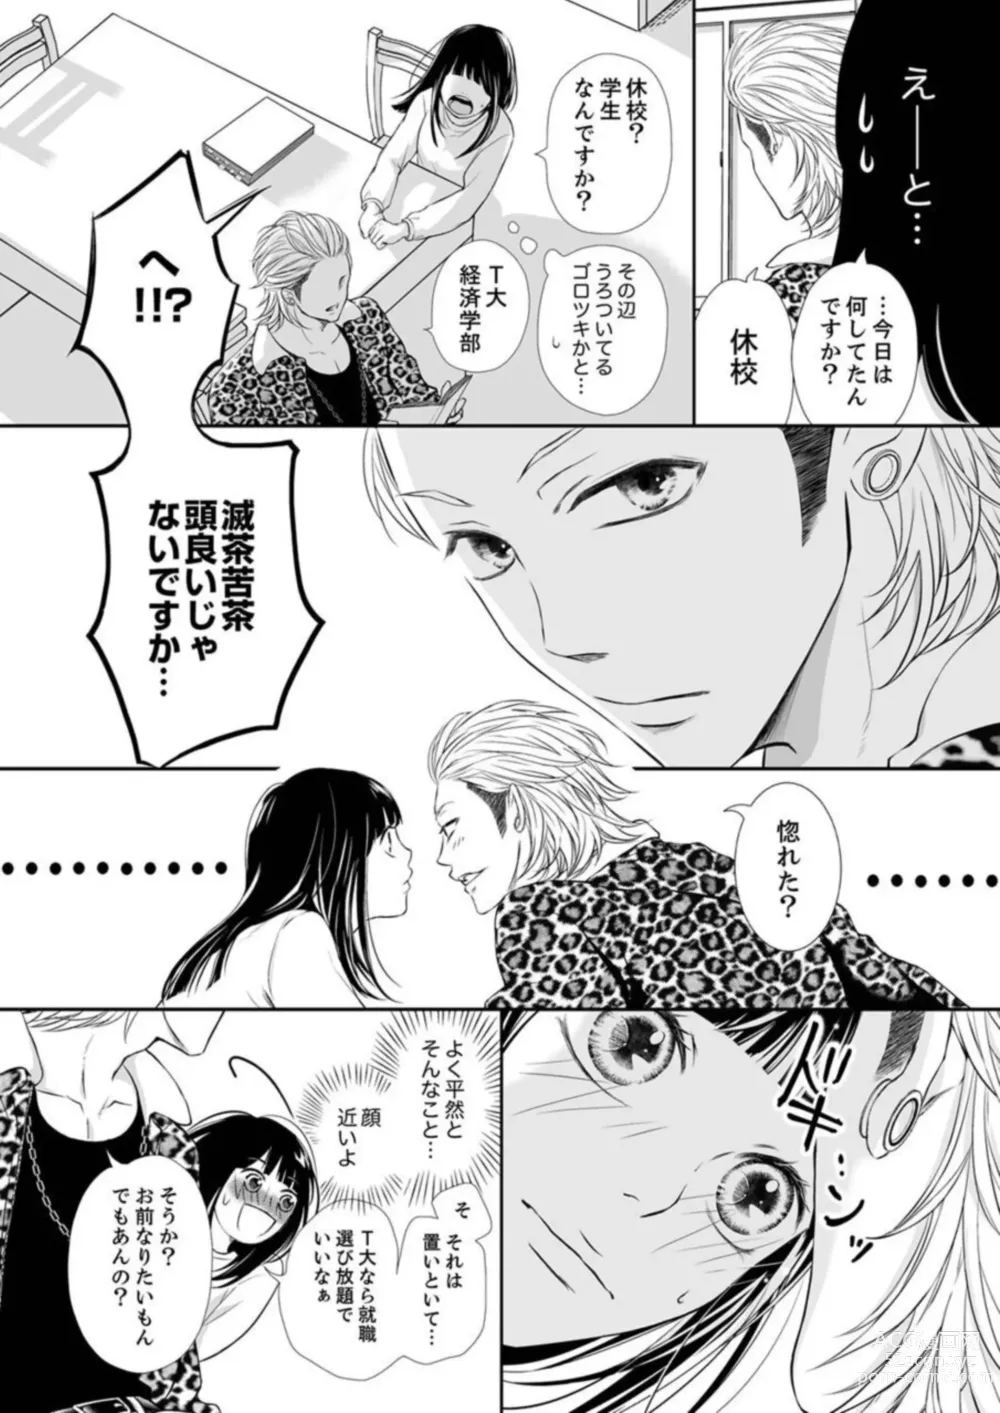 Page 10 of manga Juusei to Aegigoe ~ Uchinuku Tabi ni, Kikasero yo - Gun shot and Panting 1